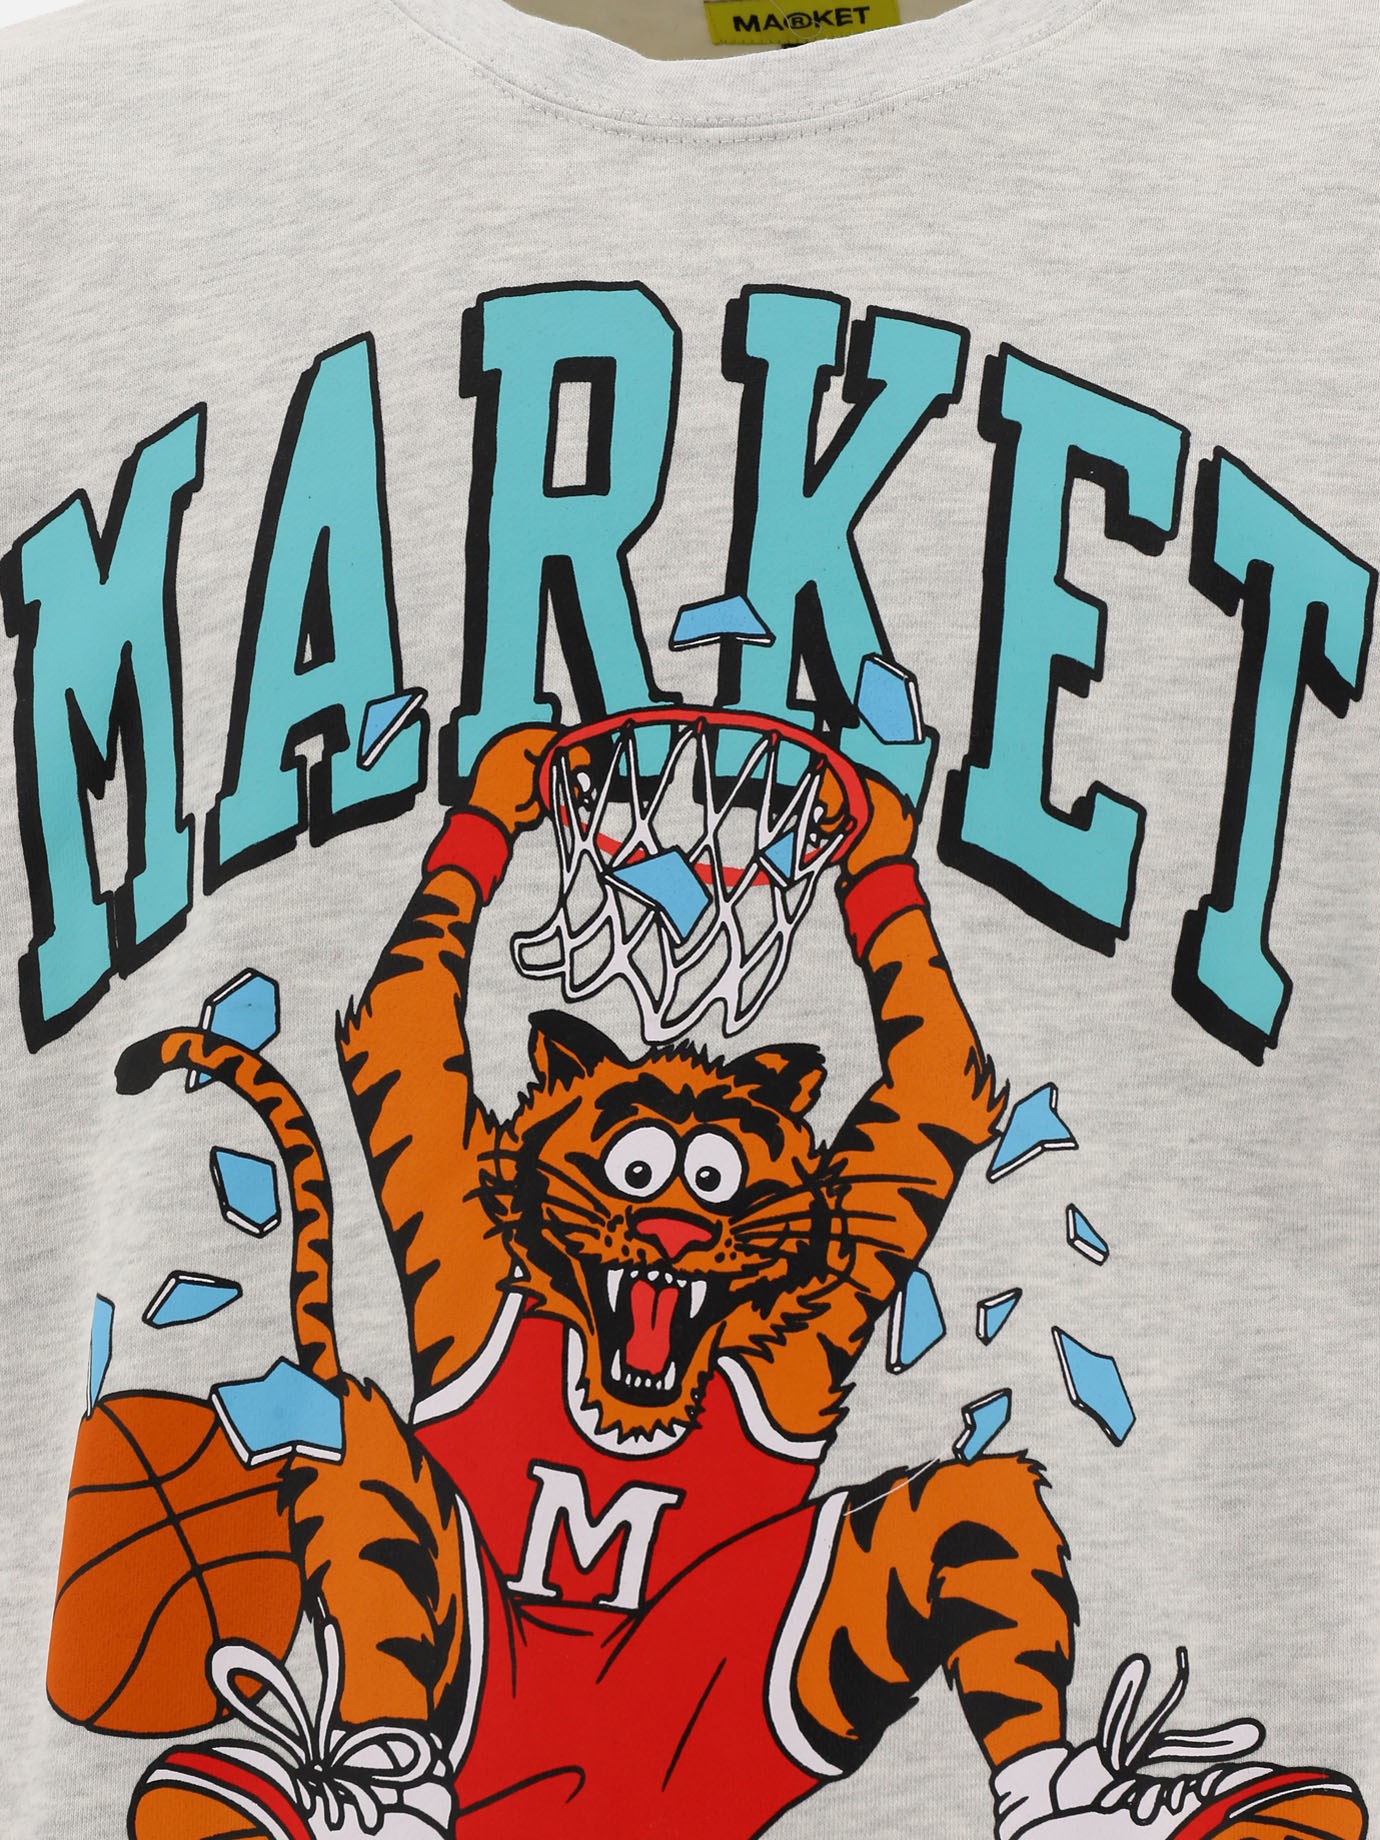  Market Dunking Cat  sweatshirt by Market